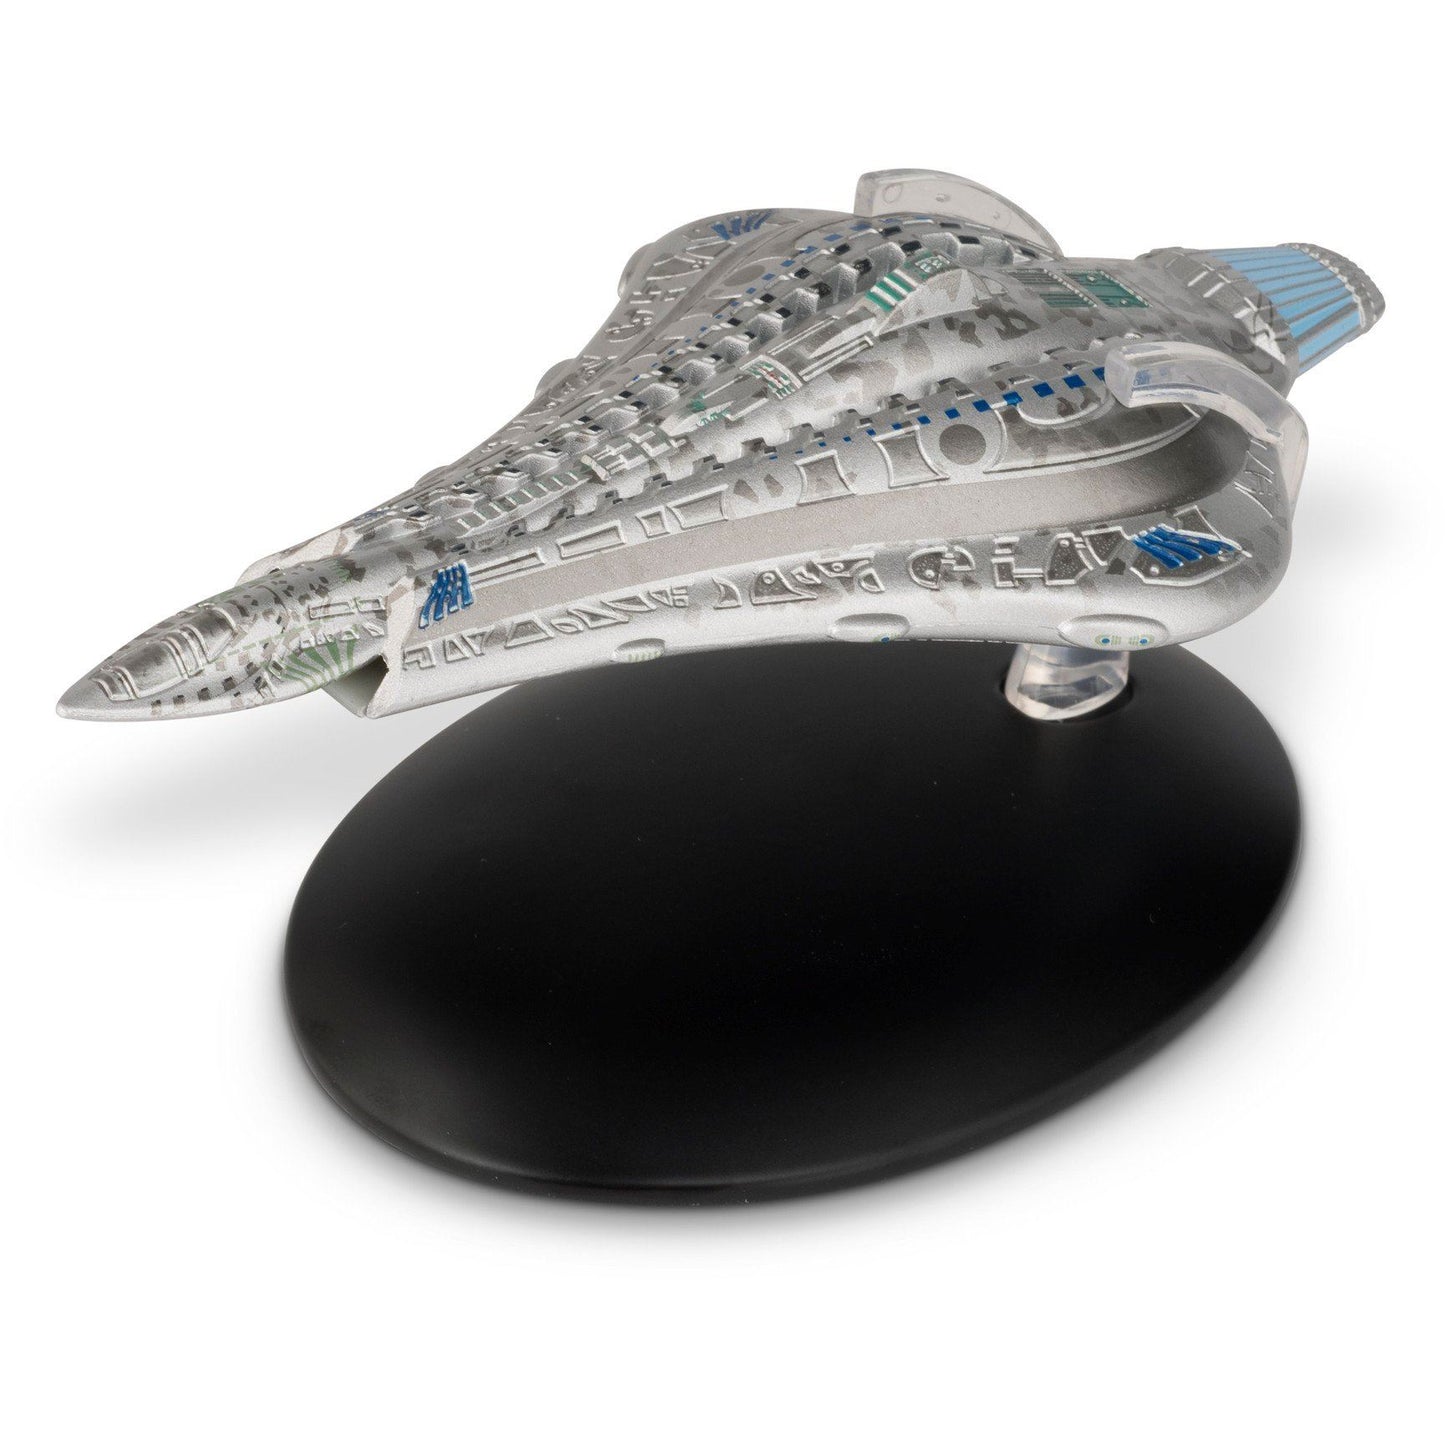 #70 Voth City Model Die Cast Ship Star Trek (Eaglemoss / Star Trek)